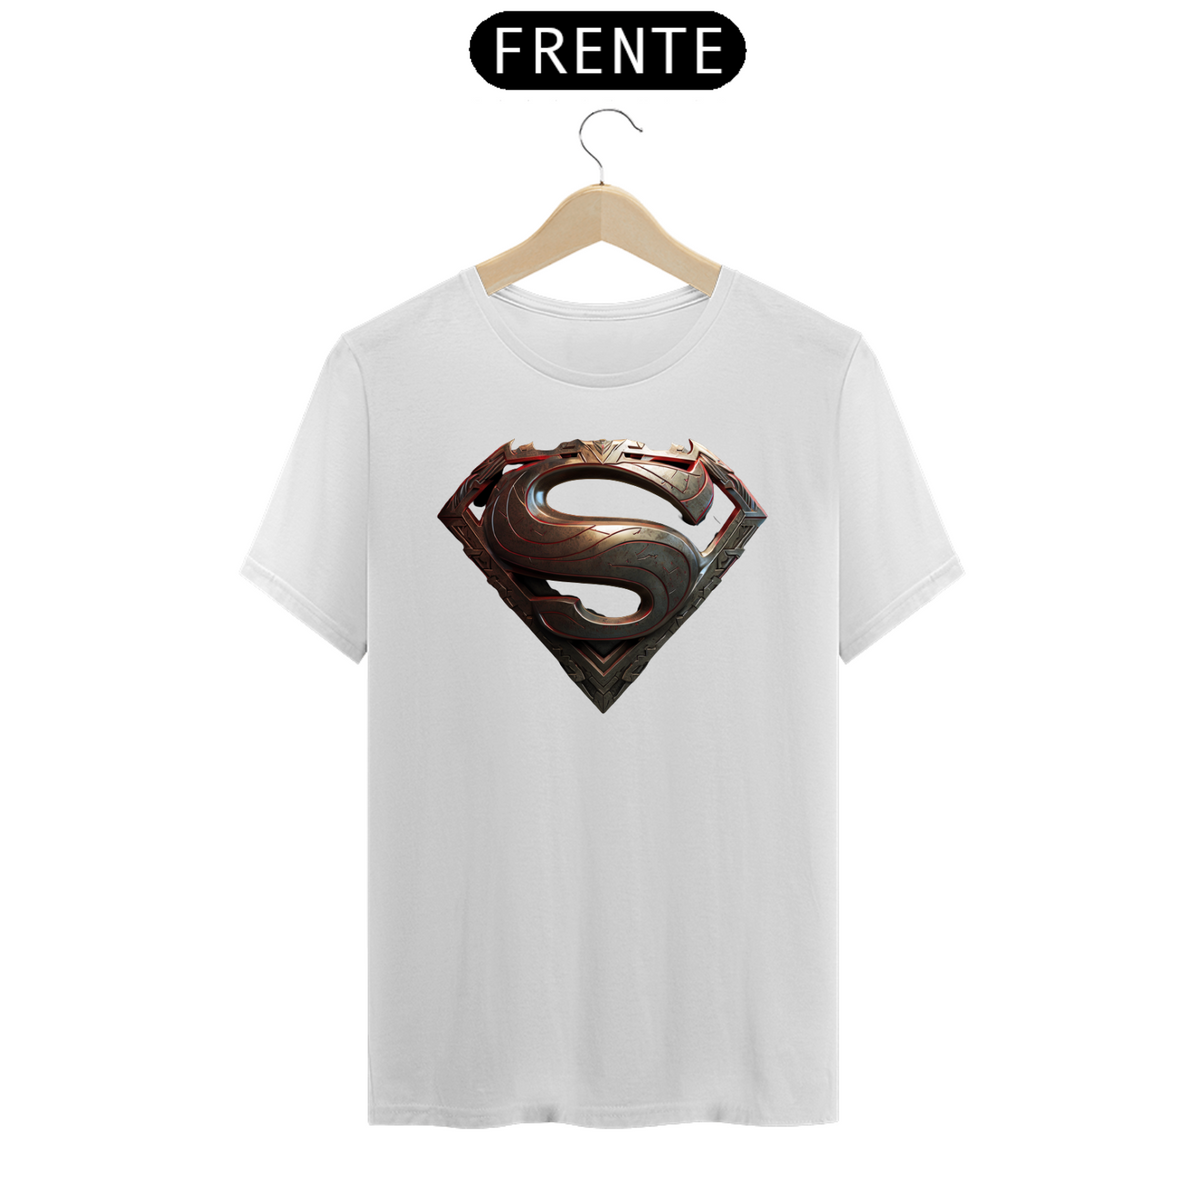 Nome do produto: Camisa Superman logo